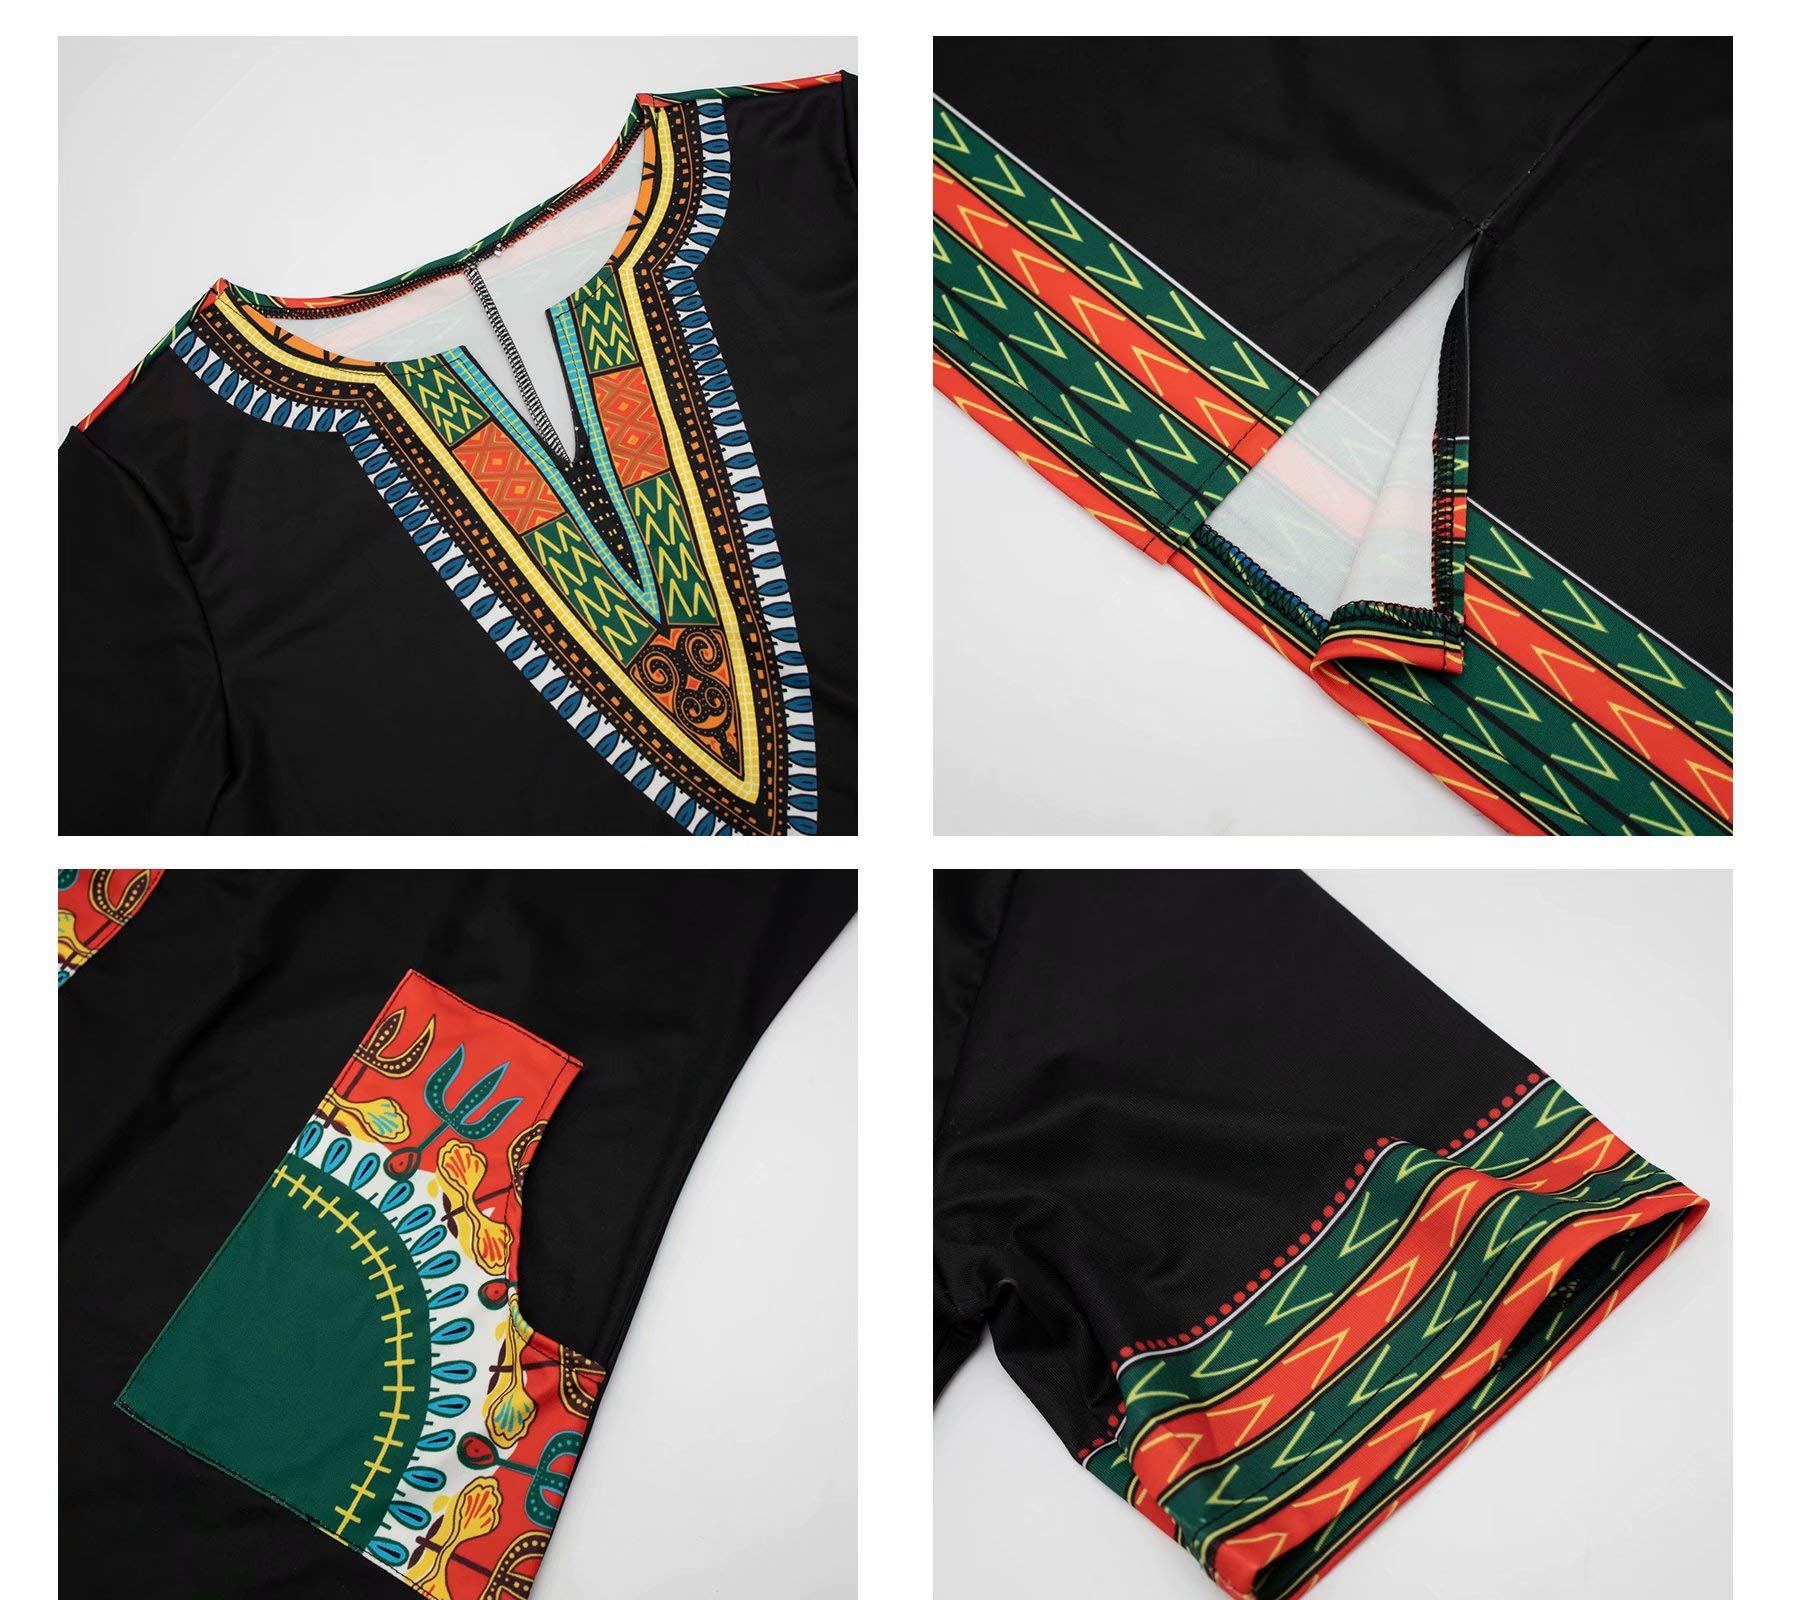 Women Bohemian V Neck African Printed Ethnic Style Summer Bodycon Shift Dress